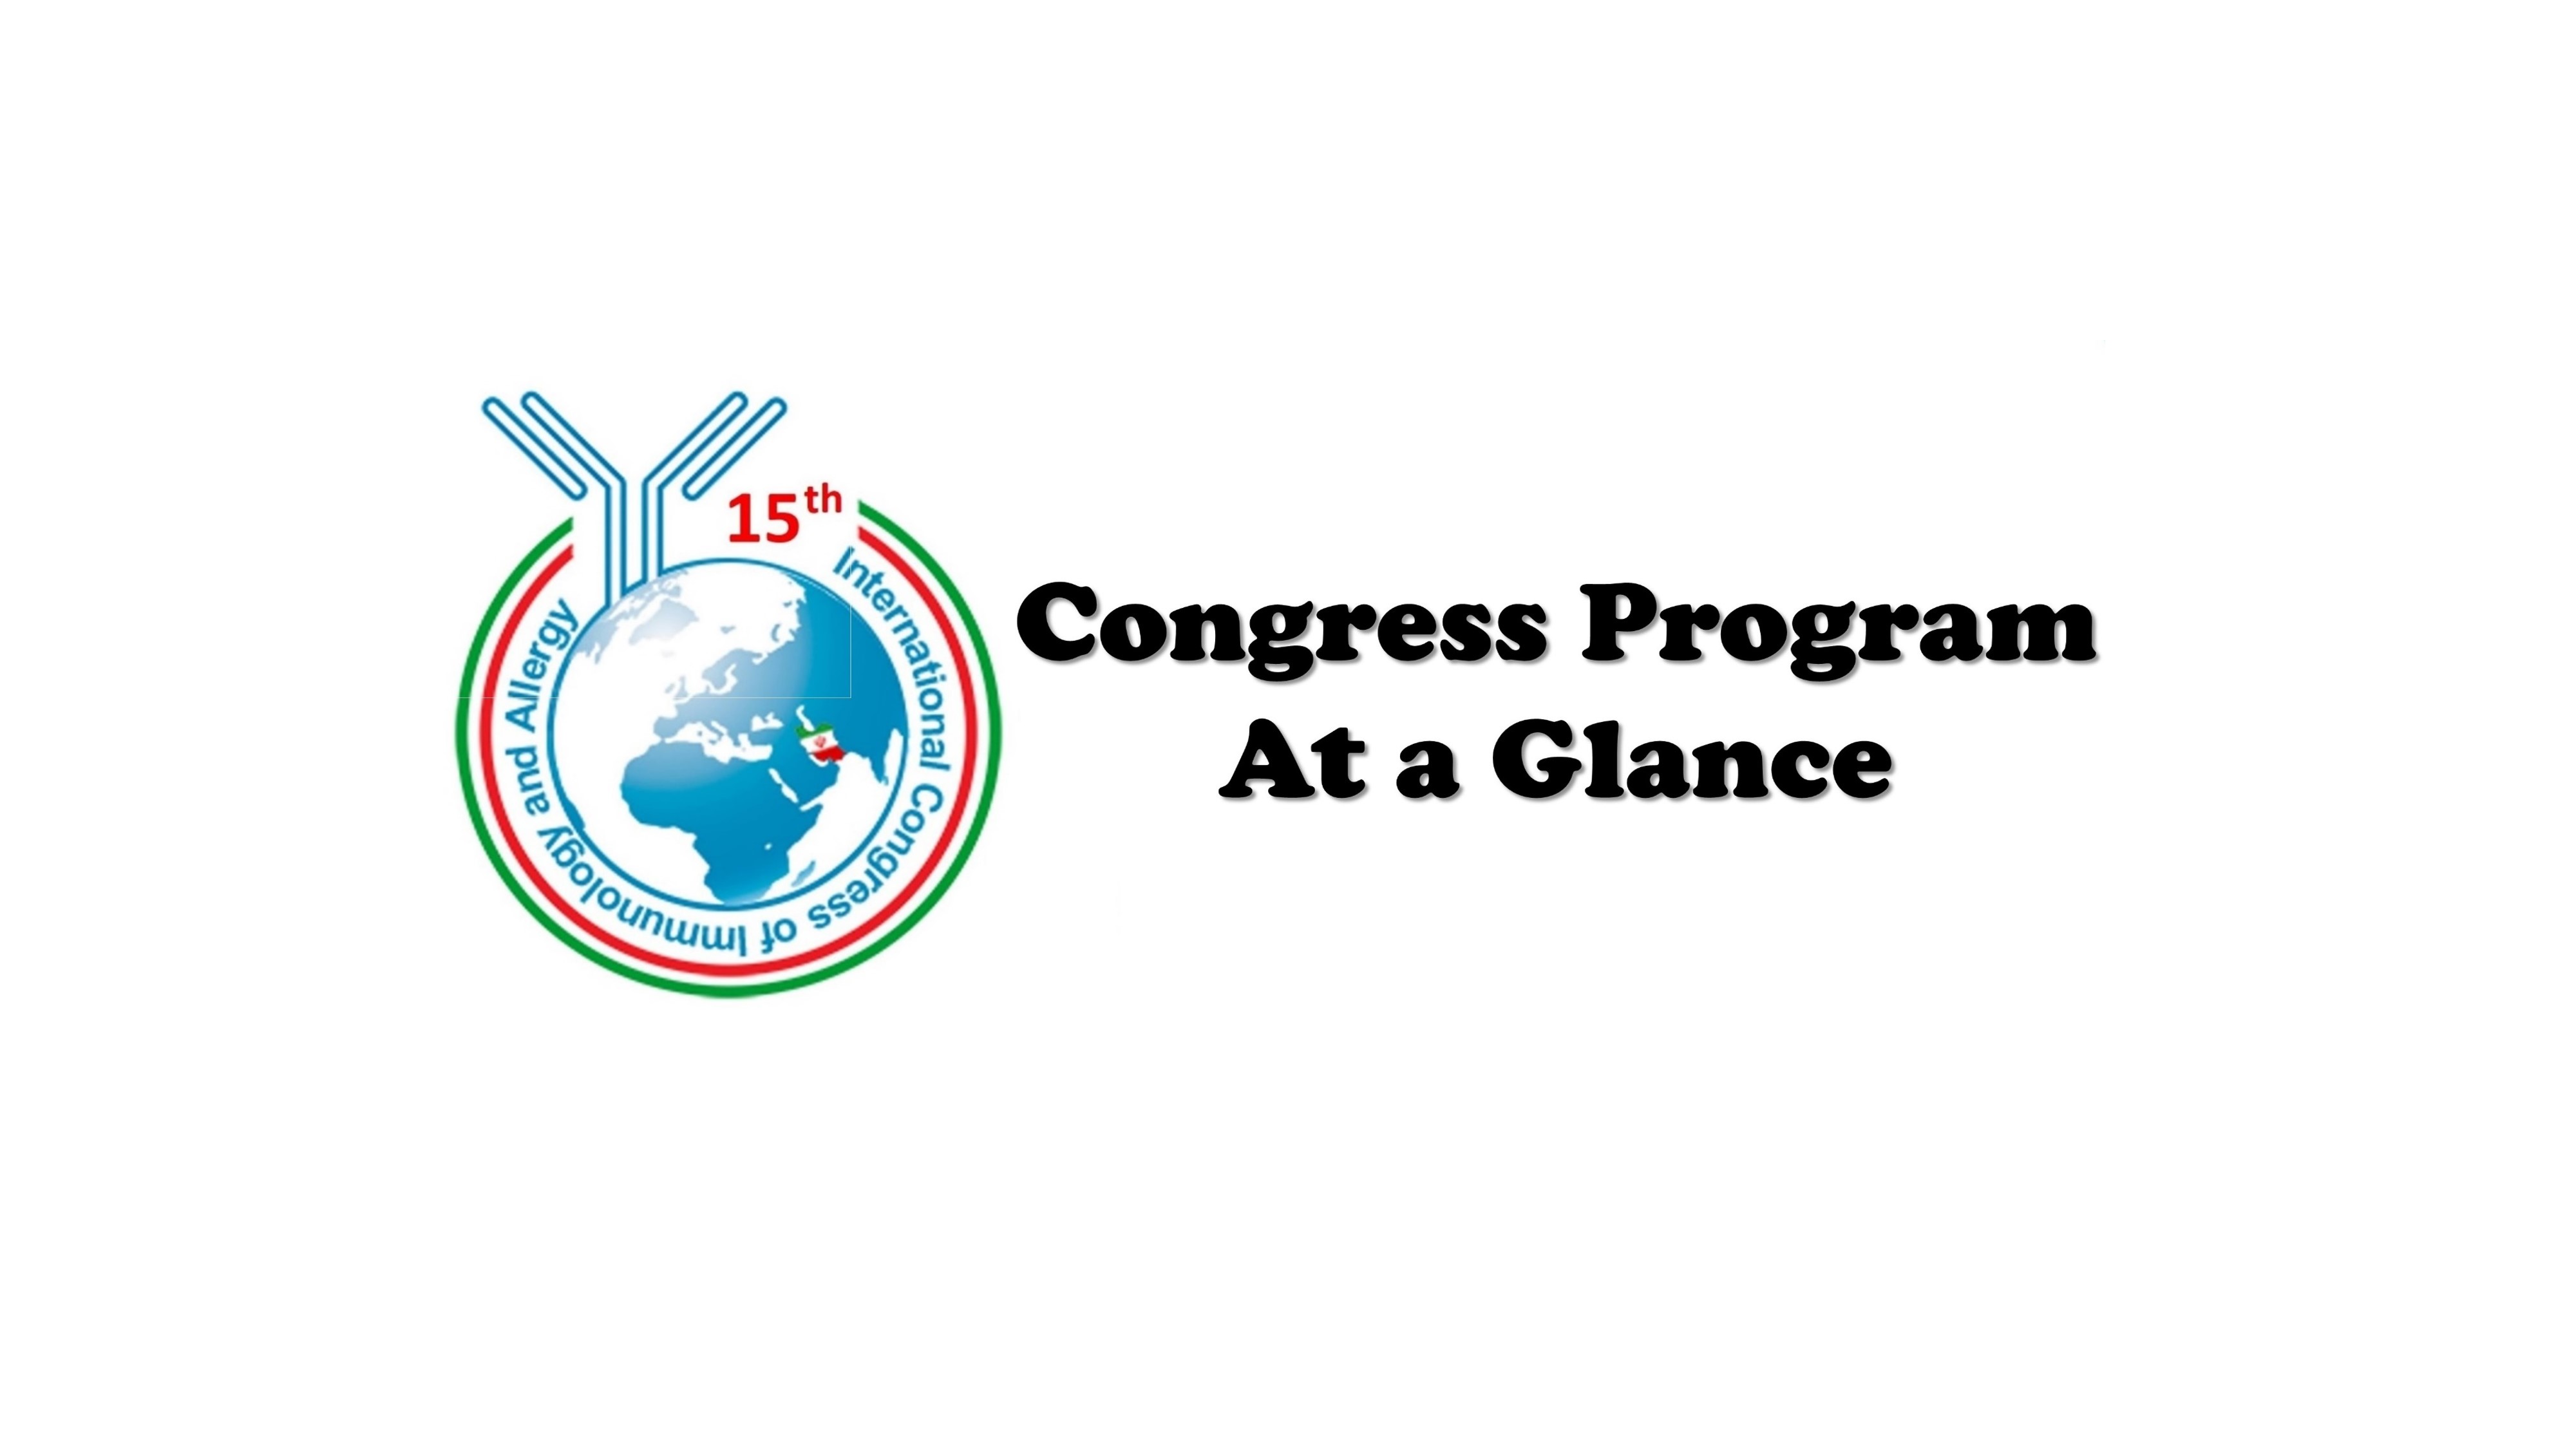 Congress Program at a Glance